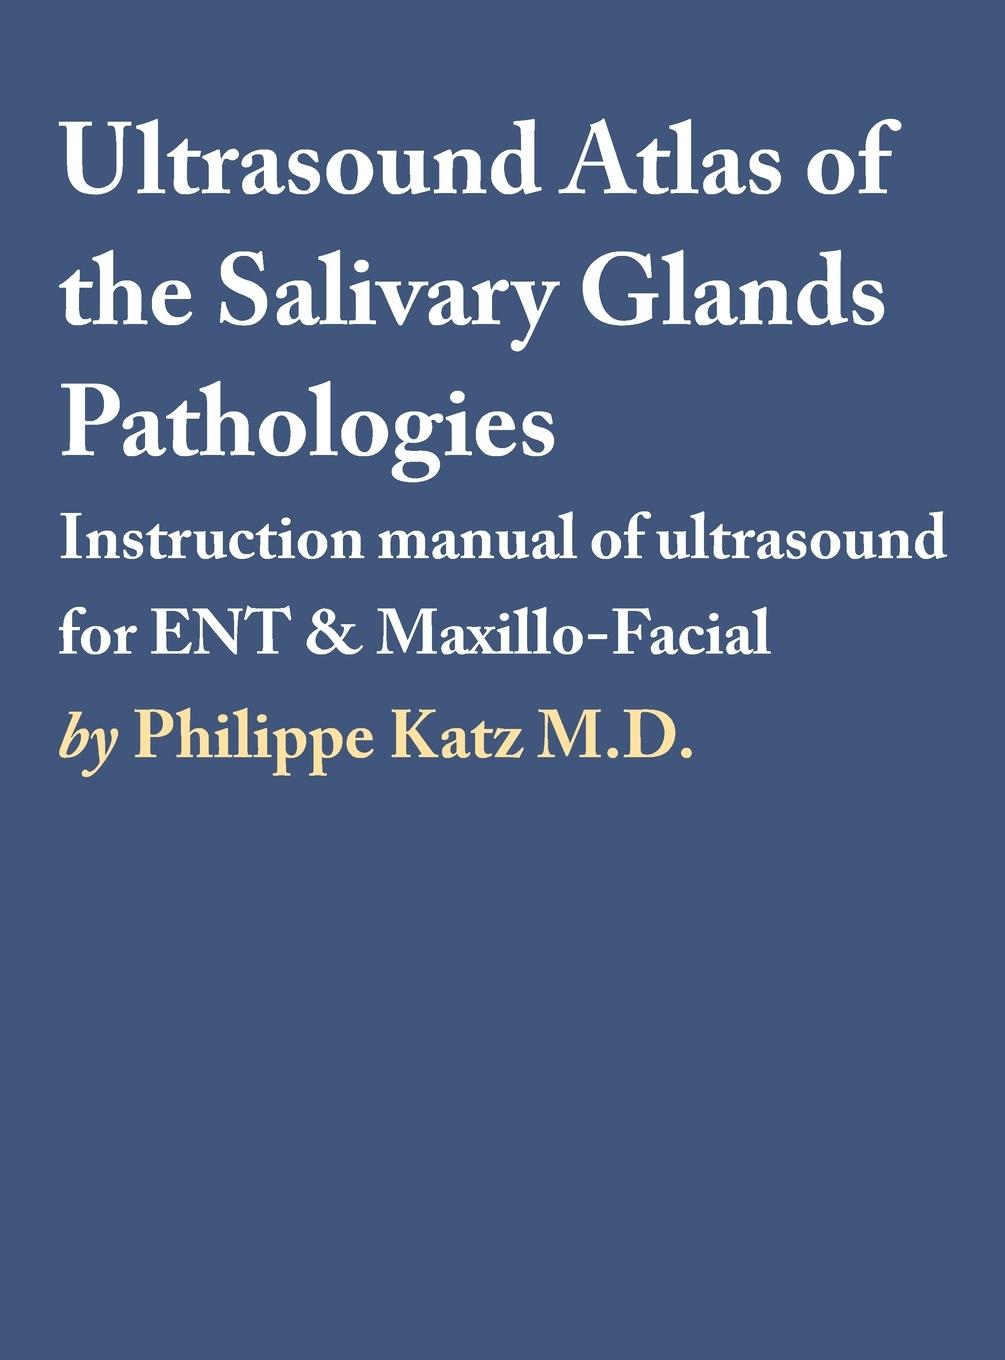 Knjiga Ultrasound Atlas of the Salivary Glands Pathologies 